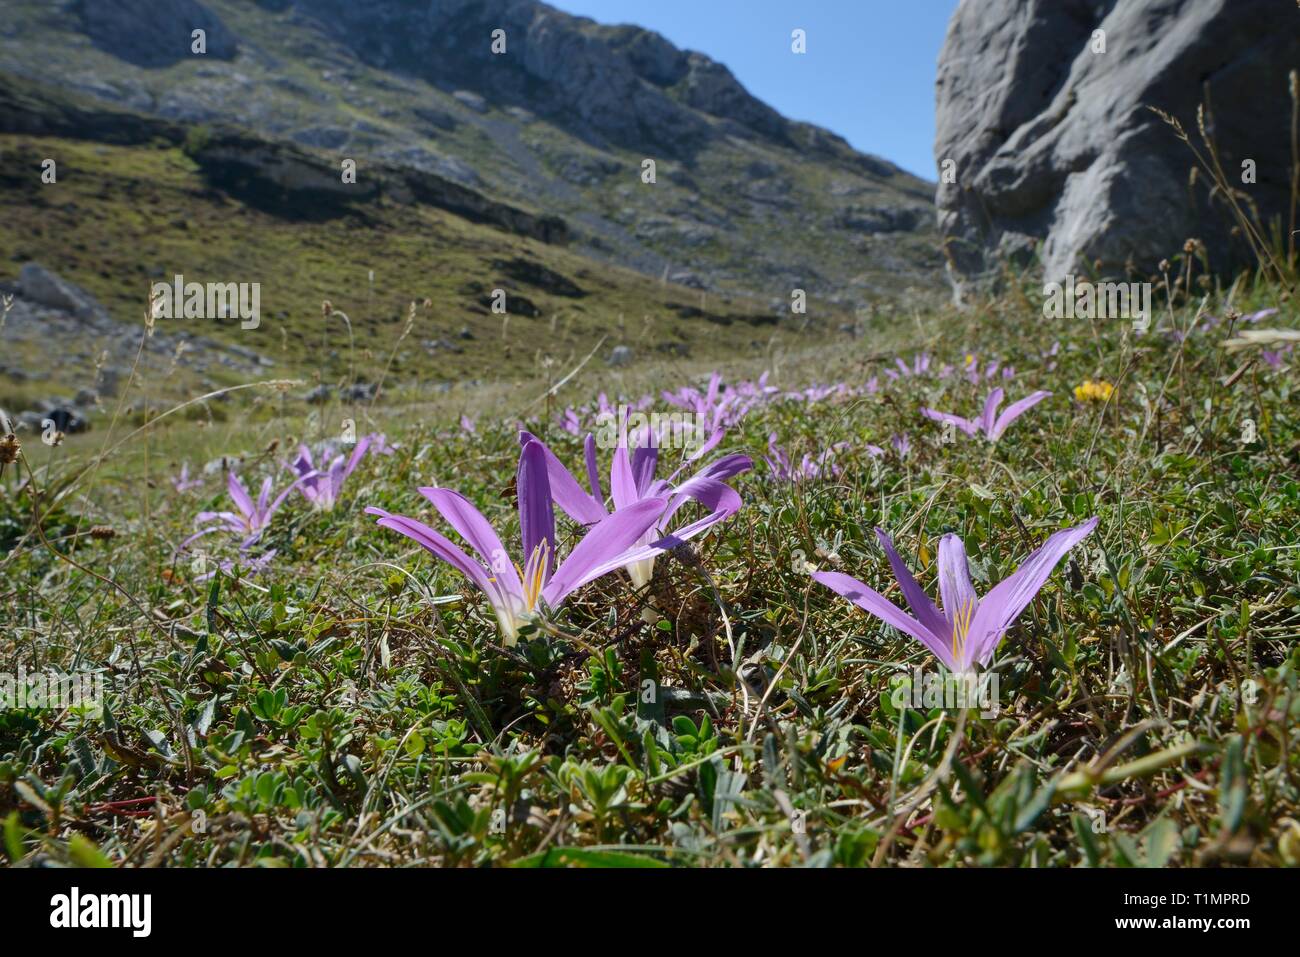 Pyrenean merendera / False meadow saffron (Merendera pyrenaica / Colchicum montanum) flowering on montane pastureland, Picos de Europa, Spain. Stock Photo